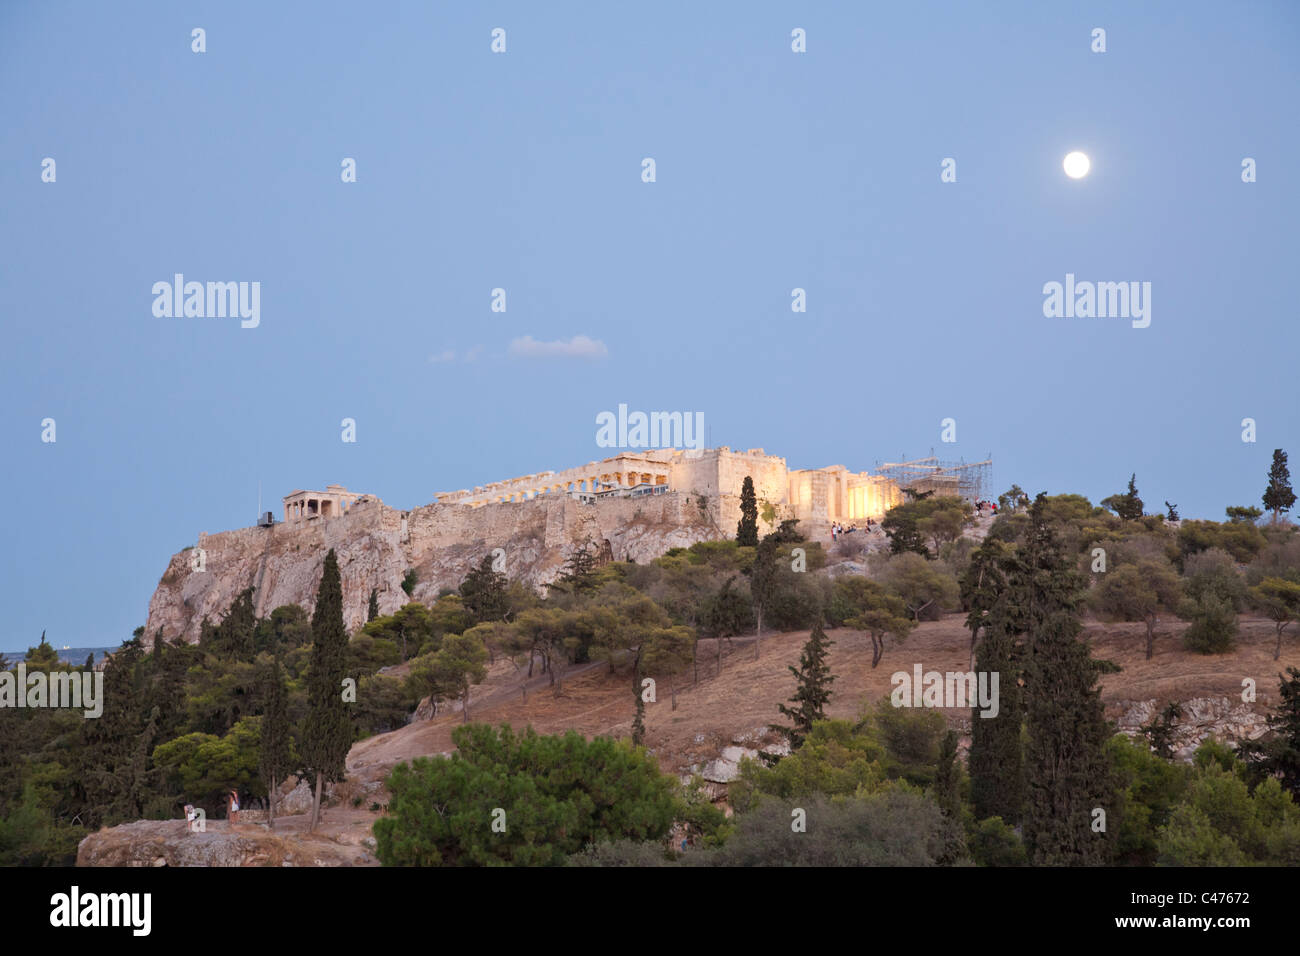 The Acropolis and the Parthenon Temple, Athens Greece Stock Photo